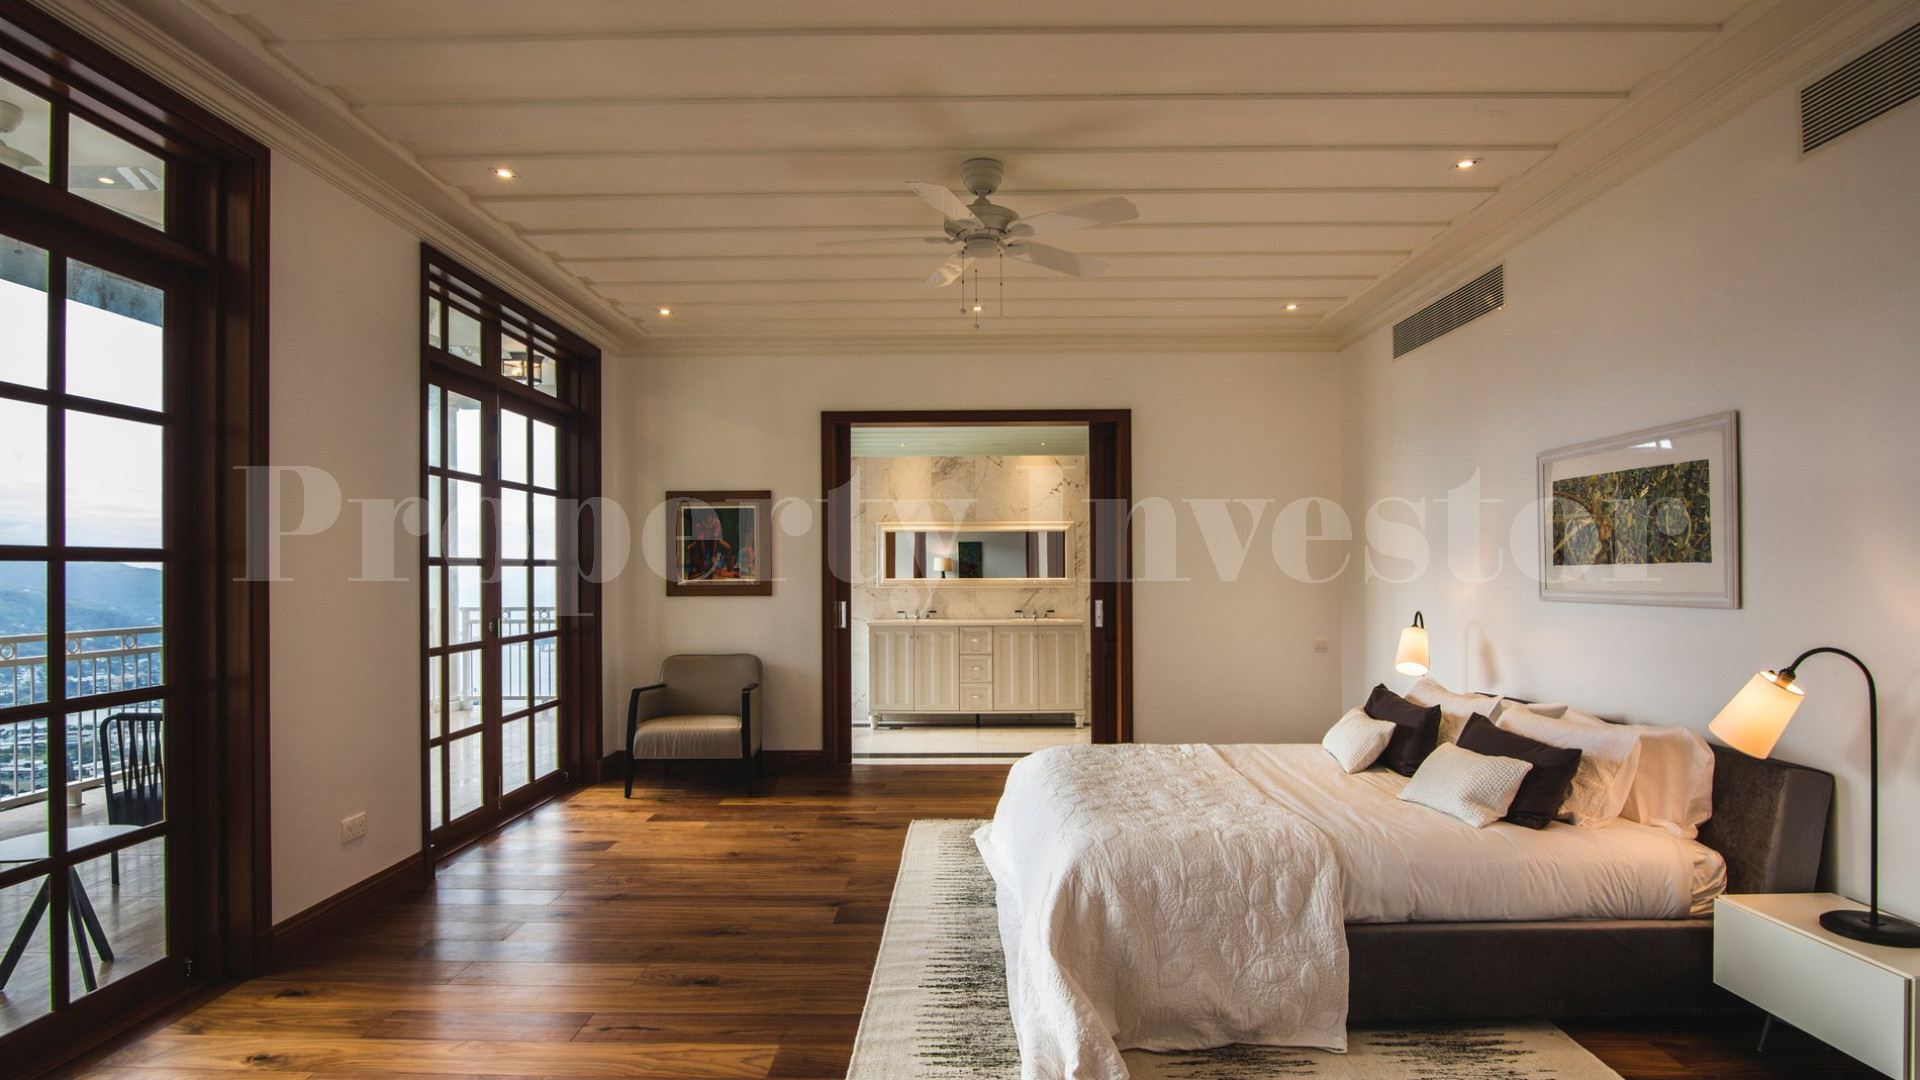 Невероятная частная вилла на 6 спален на горе с потрясающими видами на океан на о.Маэ, Сейшелы